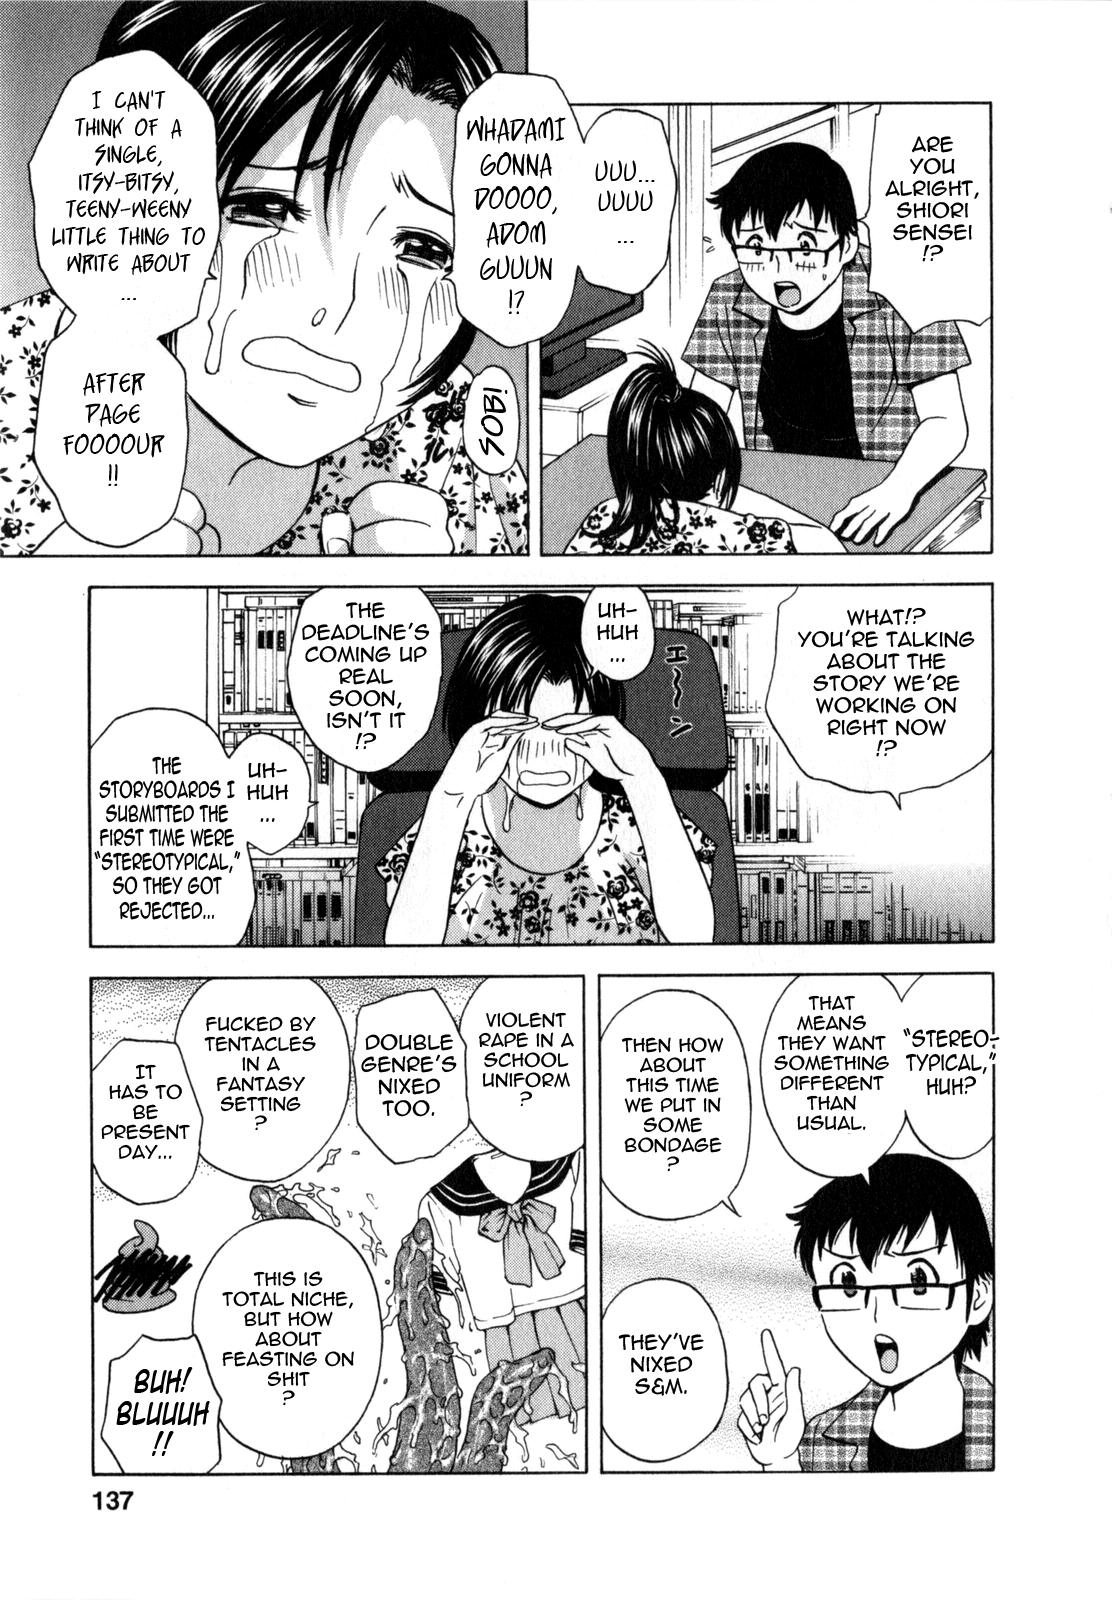 [Hidemaru] Life with Married Women Just Like a Manga 1 - Ch. 1-8 [English] {Tadanohito} 144